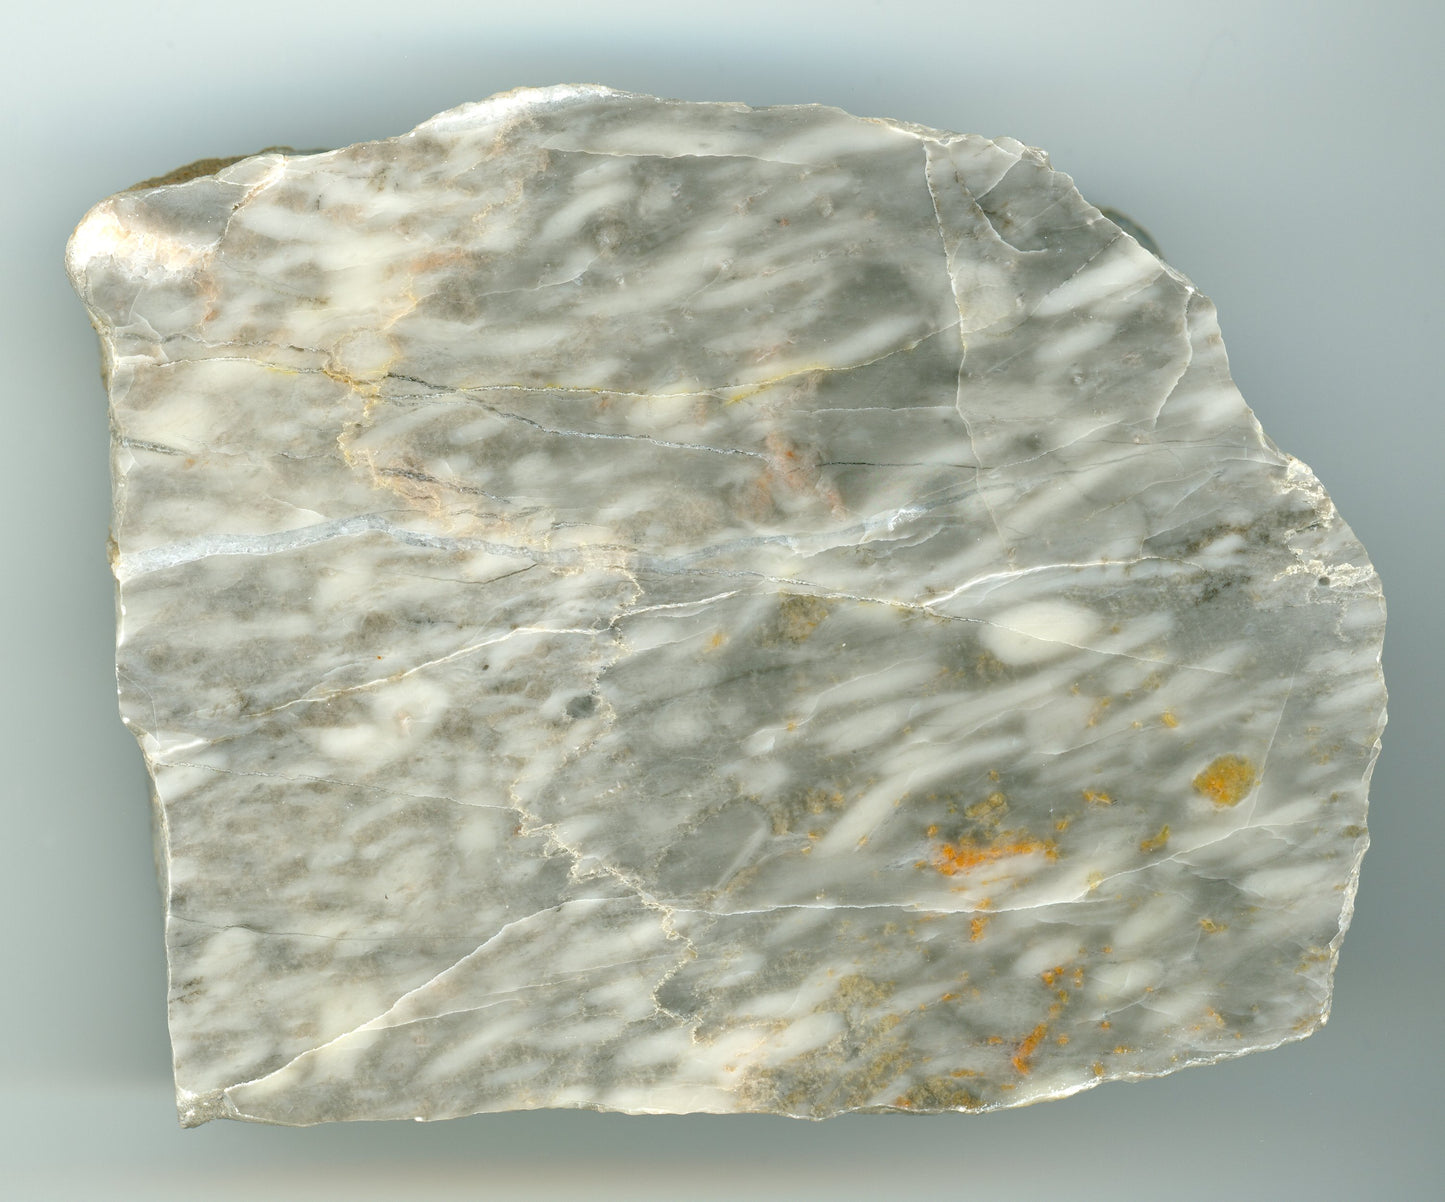 Vilémovice limestone with recrystallized stromatopore of the genus Amphipora